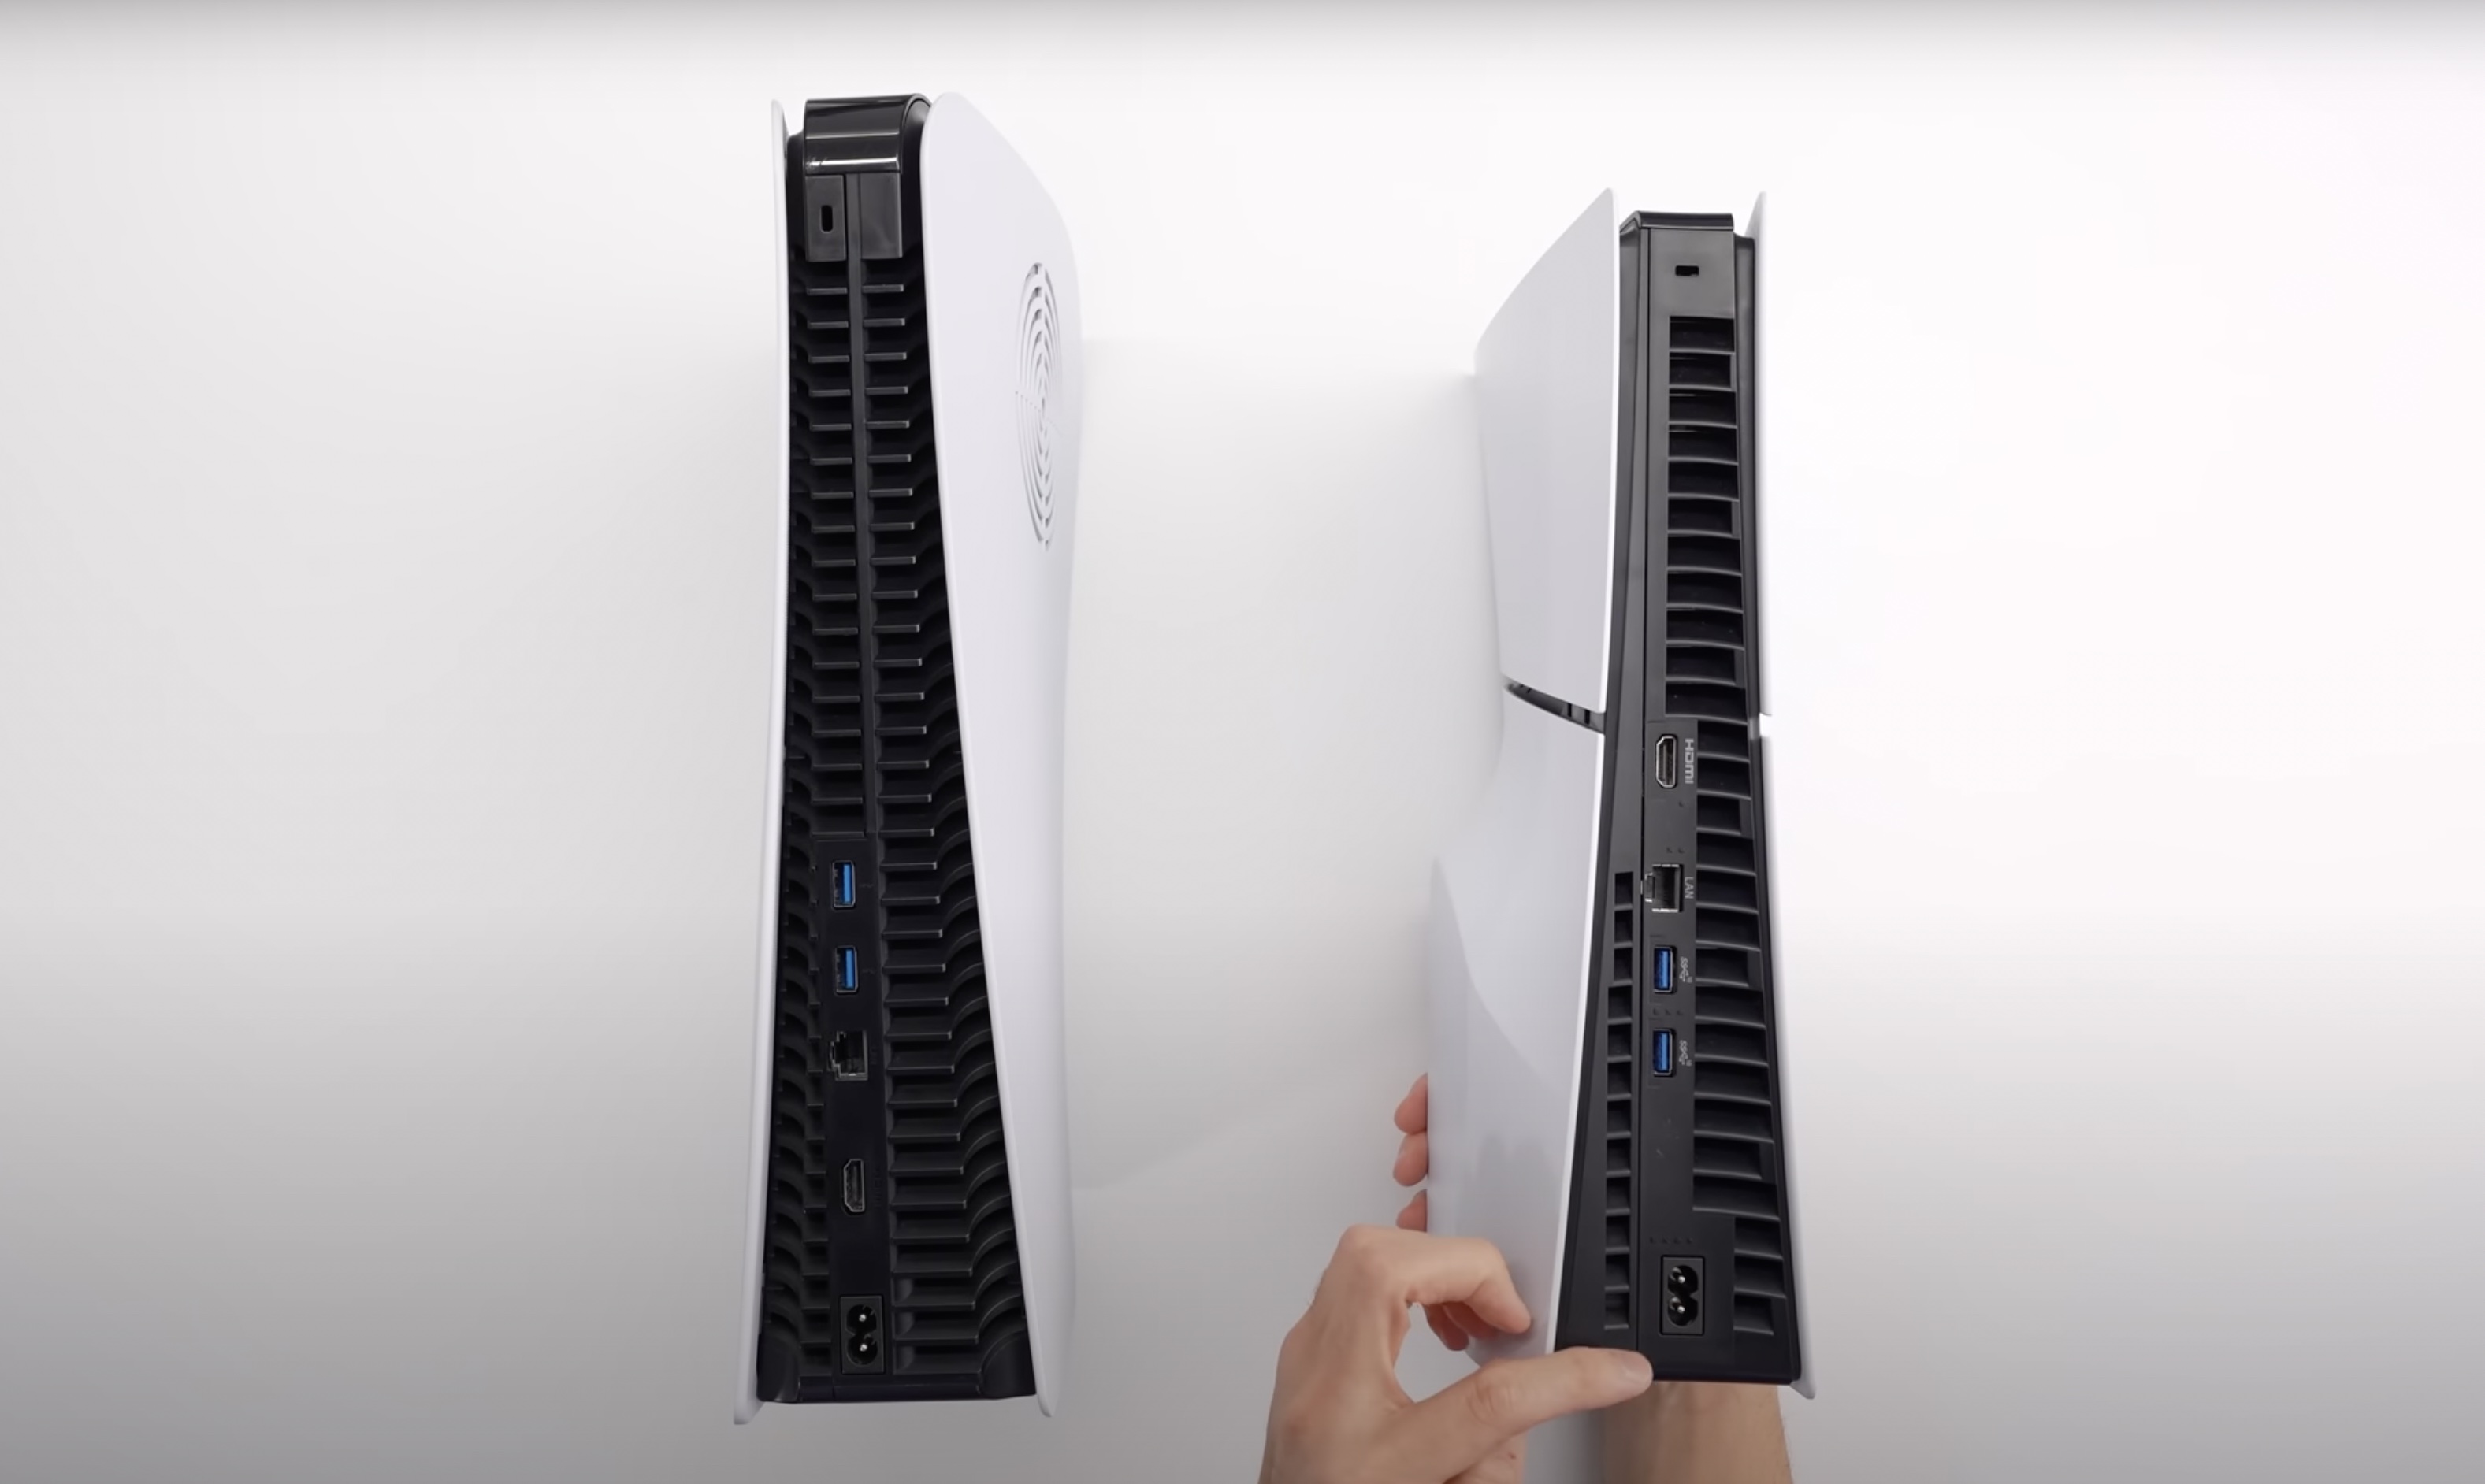 Teardown Video Showcases PS5 Slim “Not That Much Smaller”